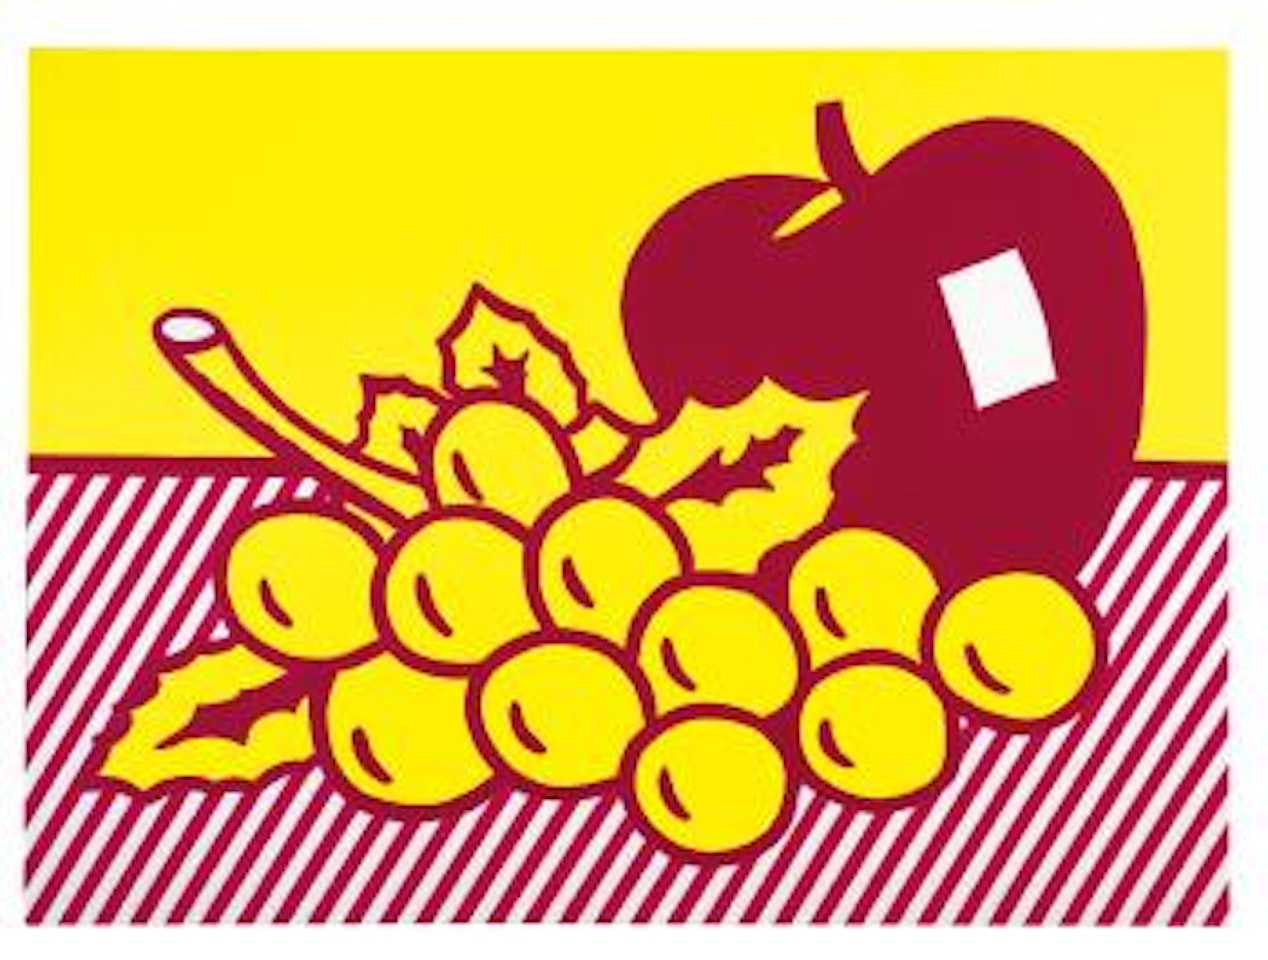 Still Life: Apple And Grapes by Roy Lichtenstein